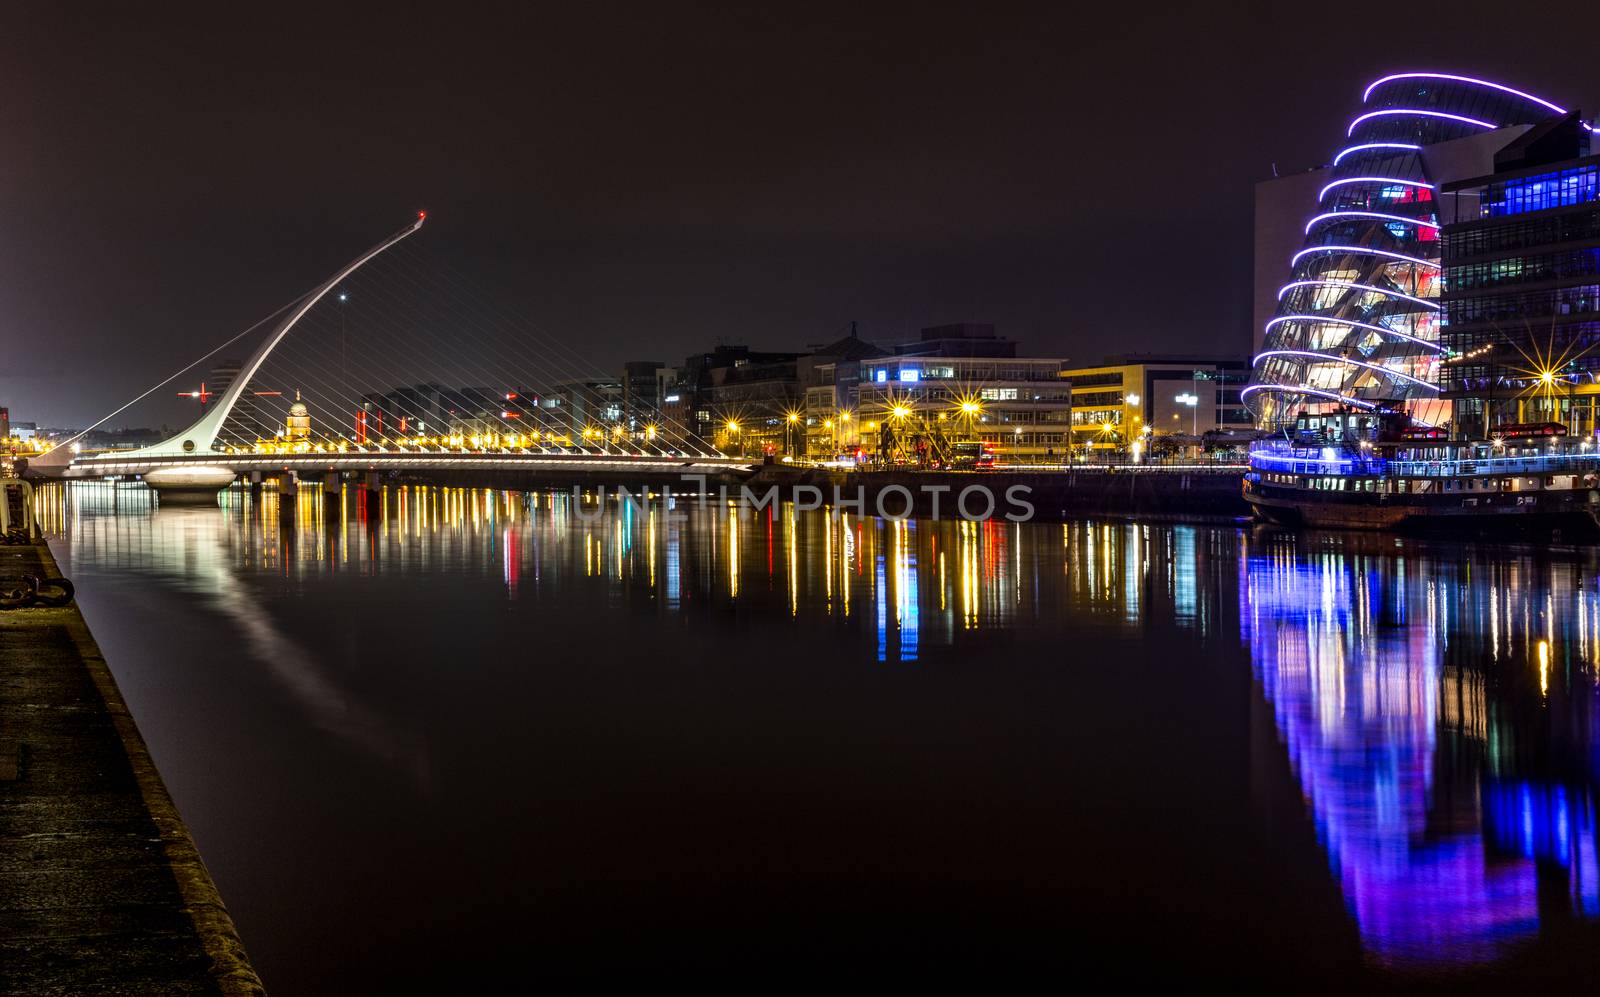 Dublin Ireland River Liffey at Night with harp bridge reflections night by mlechanteur